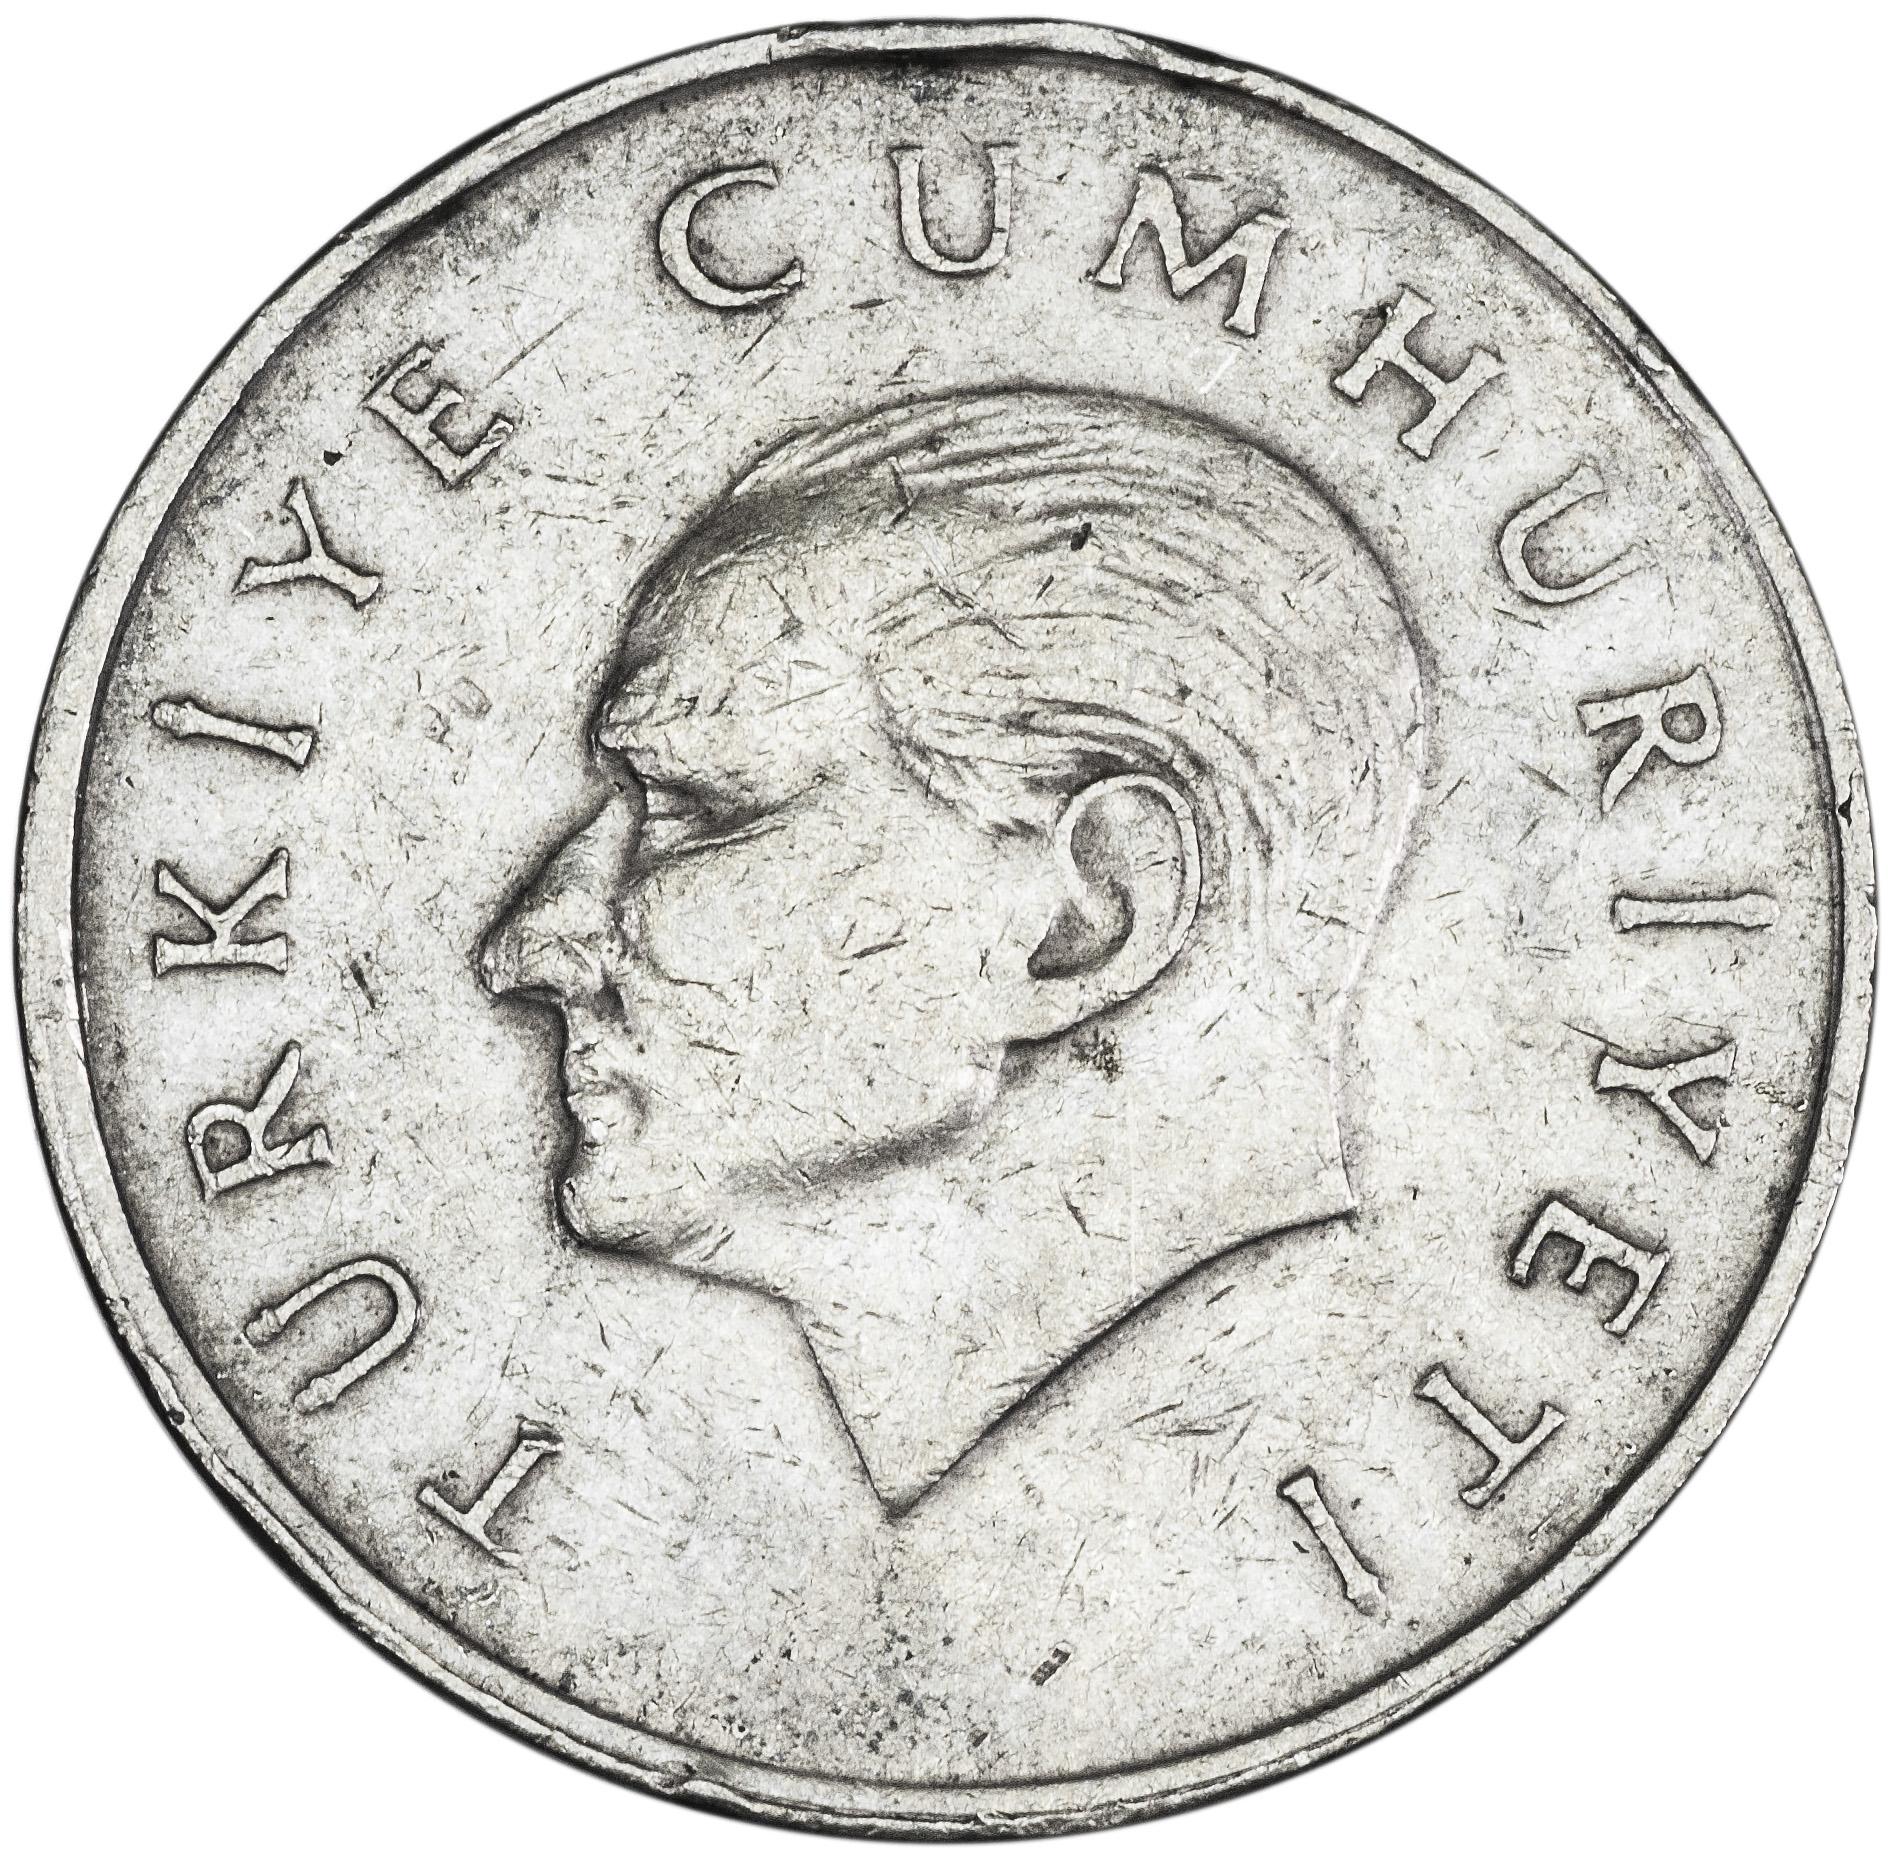 25000 лир в рублях. Монета 25000 лир Турция. 25000 Турецких лир. Монета Турции 25000 лир 1996 года.